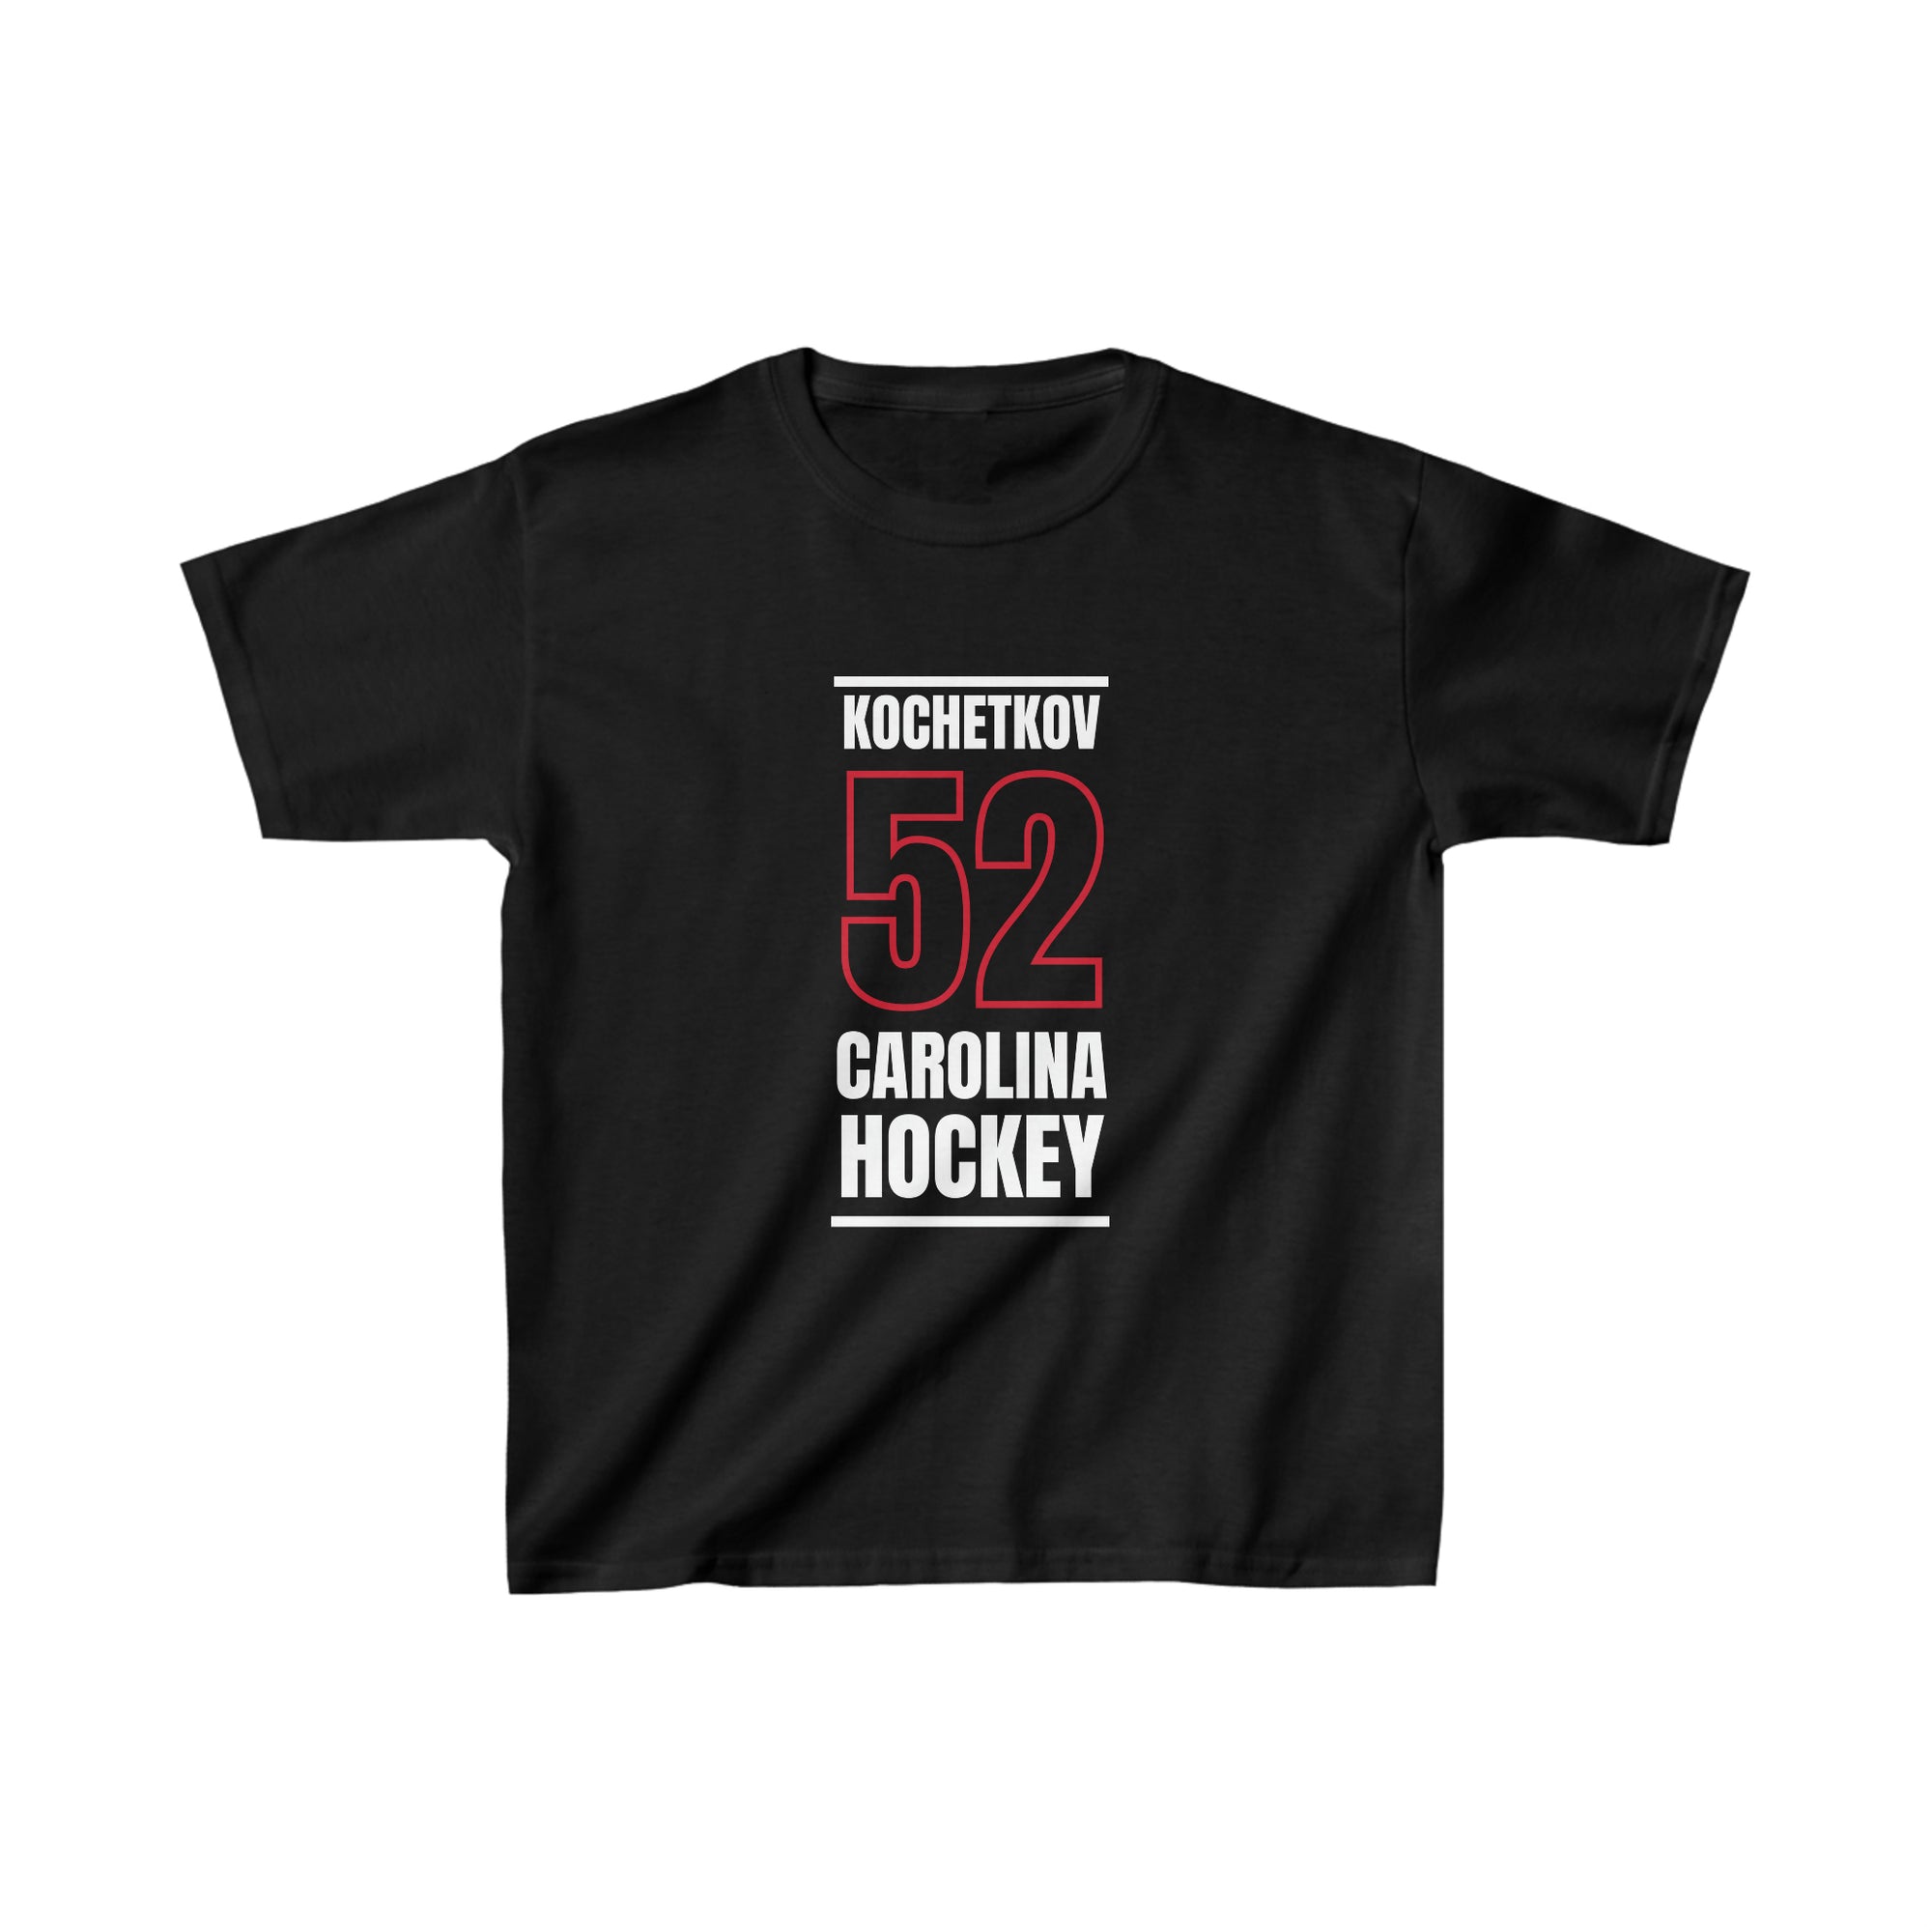 Kochetkov 52 Carolina Hockey Black Vertical Design Kids Tee